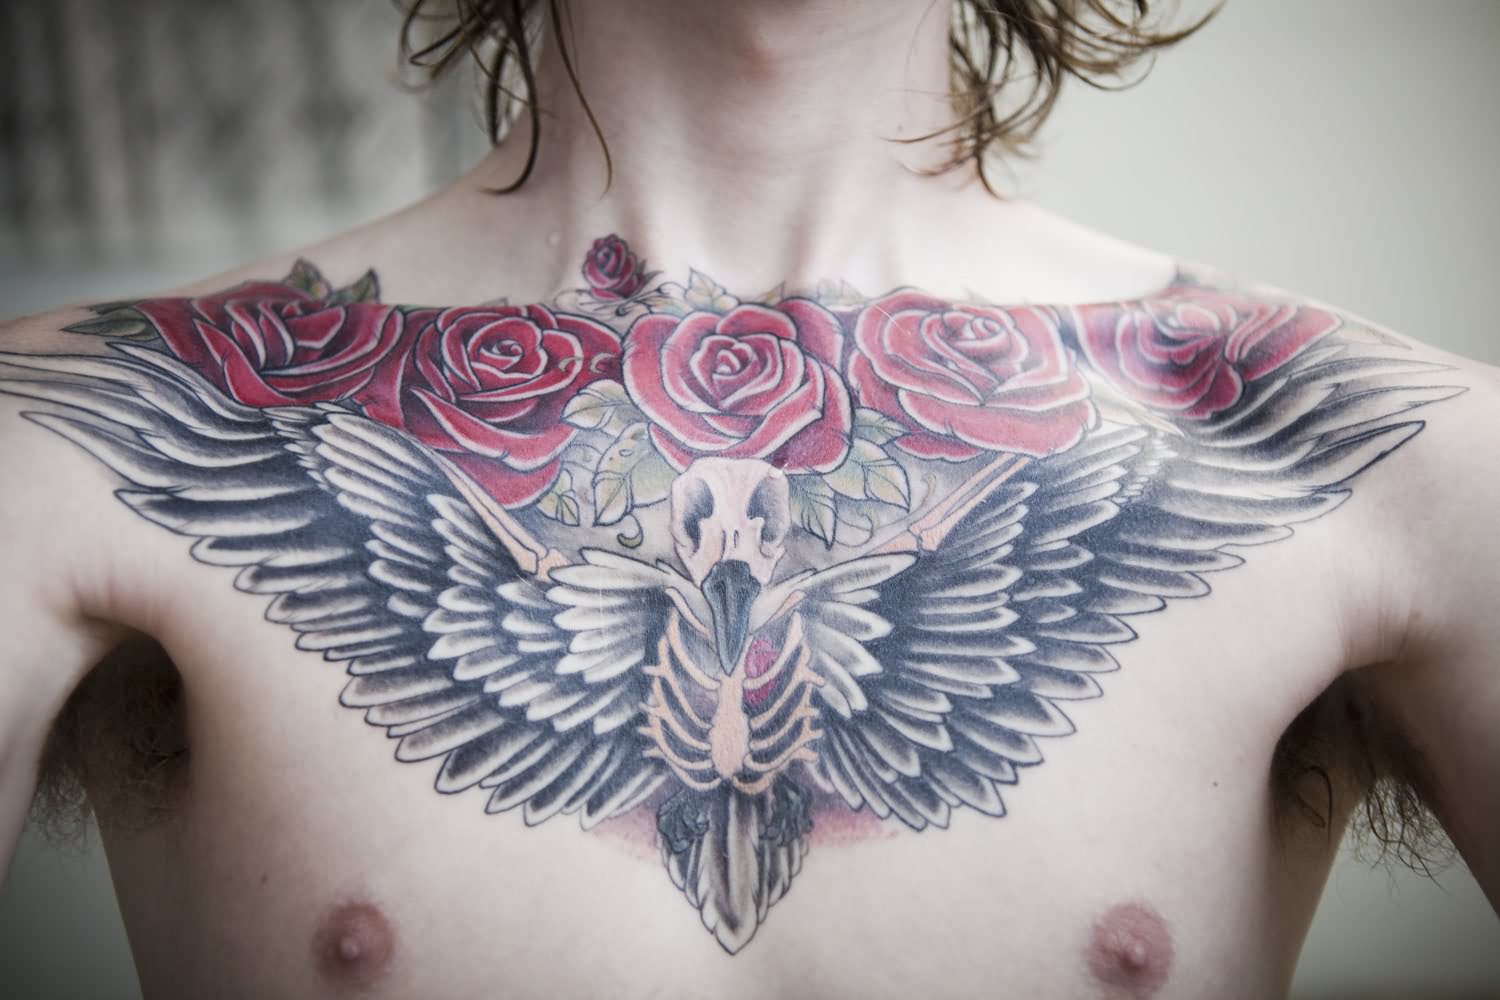 Rose Flowers With Bird Skeleton Tattoo On Collar Bone